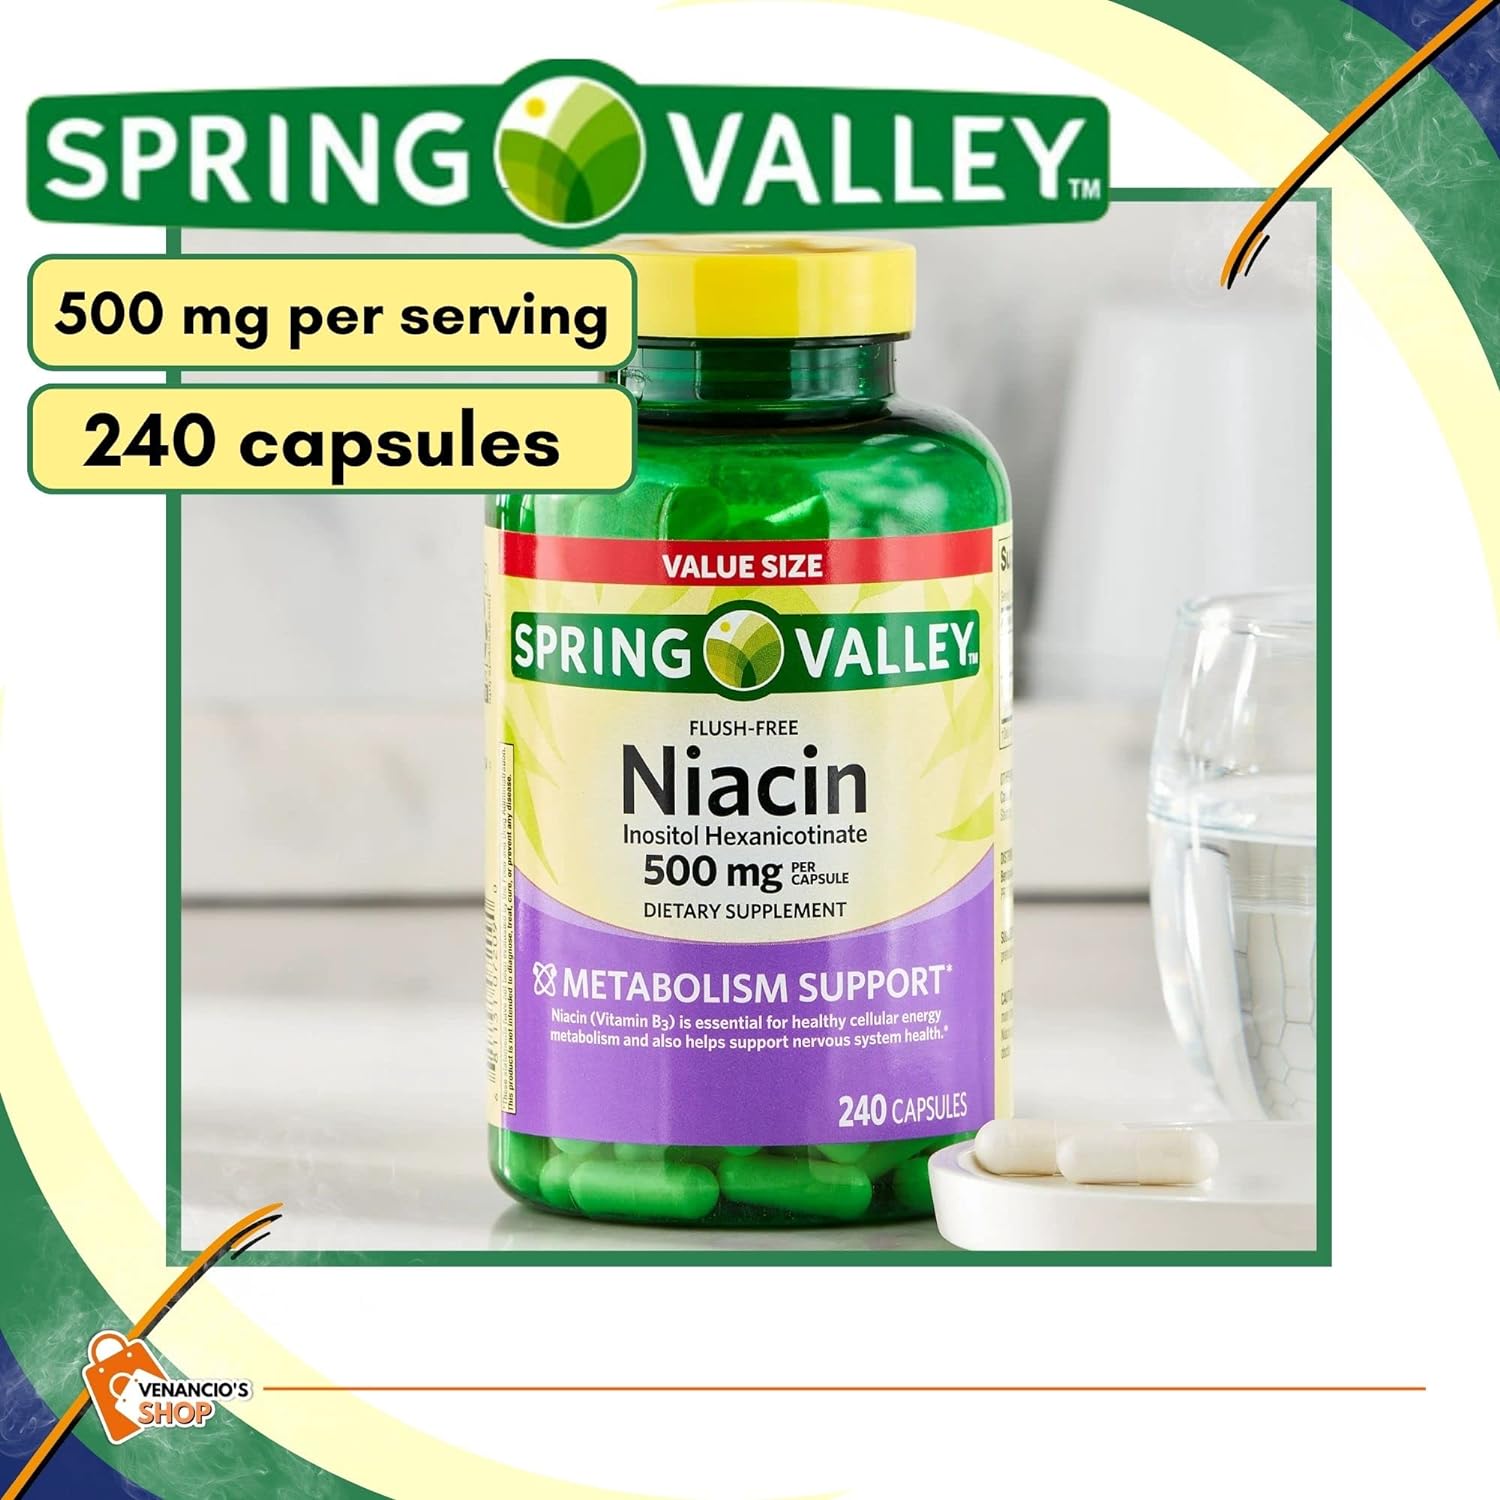 Spring Valley Vitamin B3 Niacin 500mg Flush Free Capsules, Dietary Supplement and Metabolism Support Supplement *+ Includes Venancio’sFridge Sticker (60 Pills)